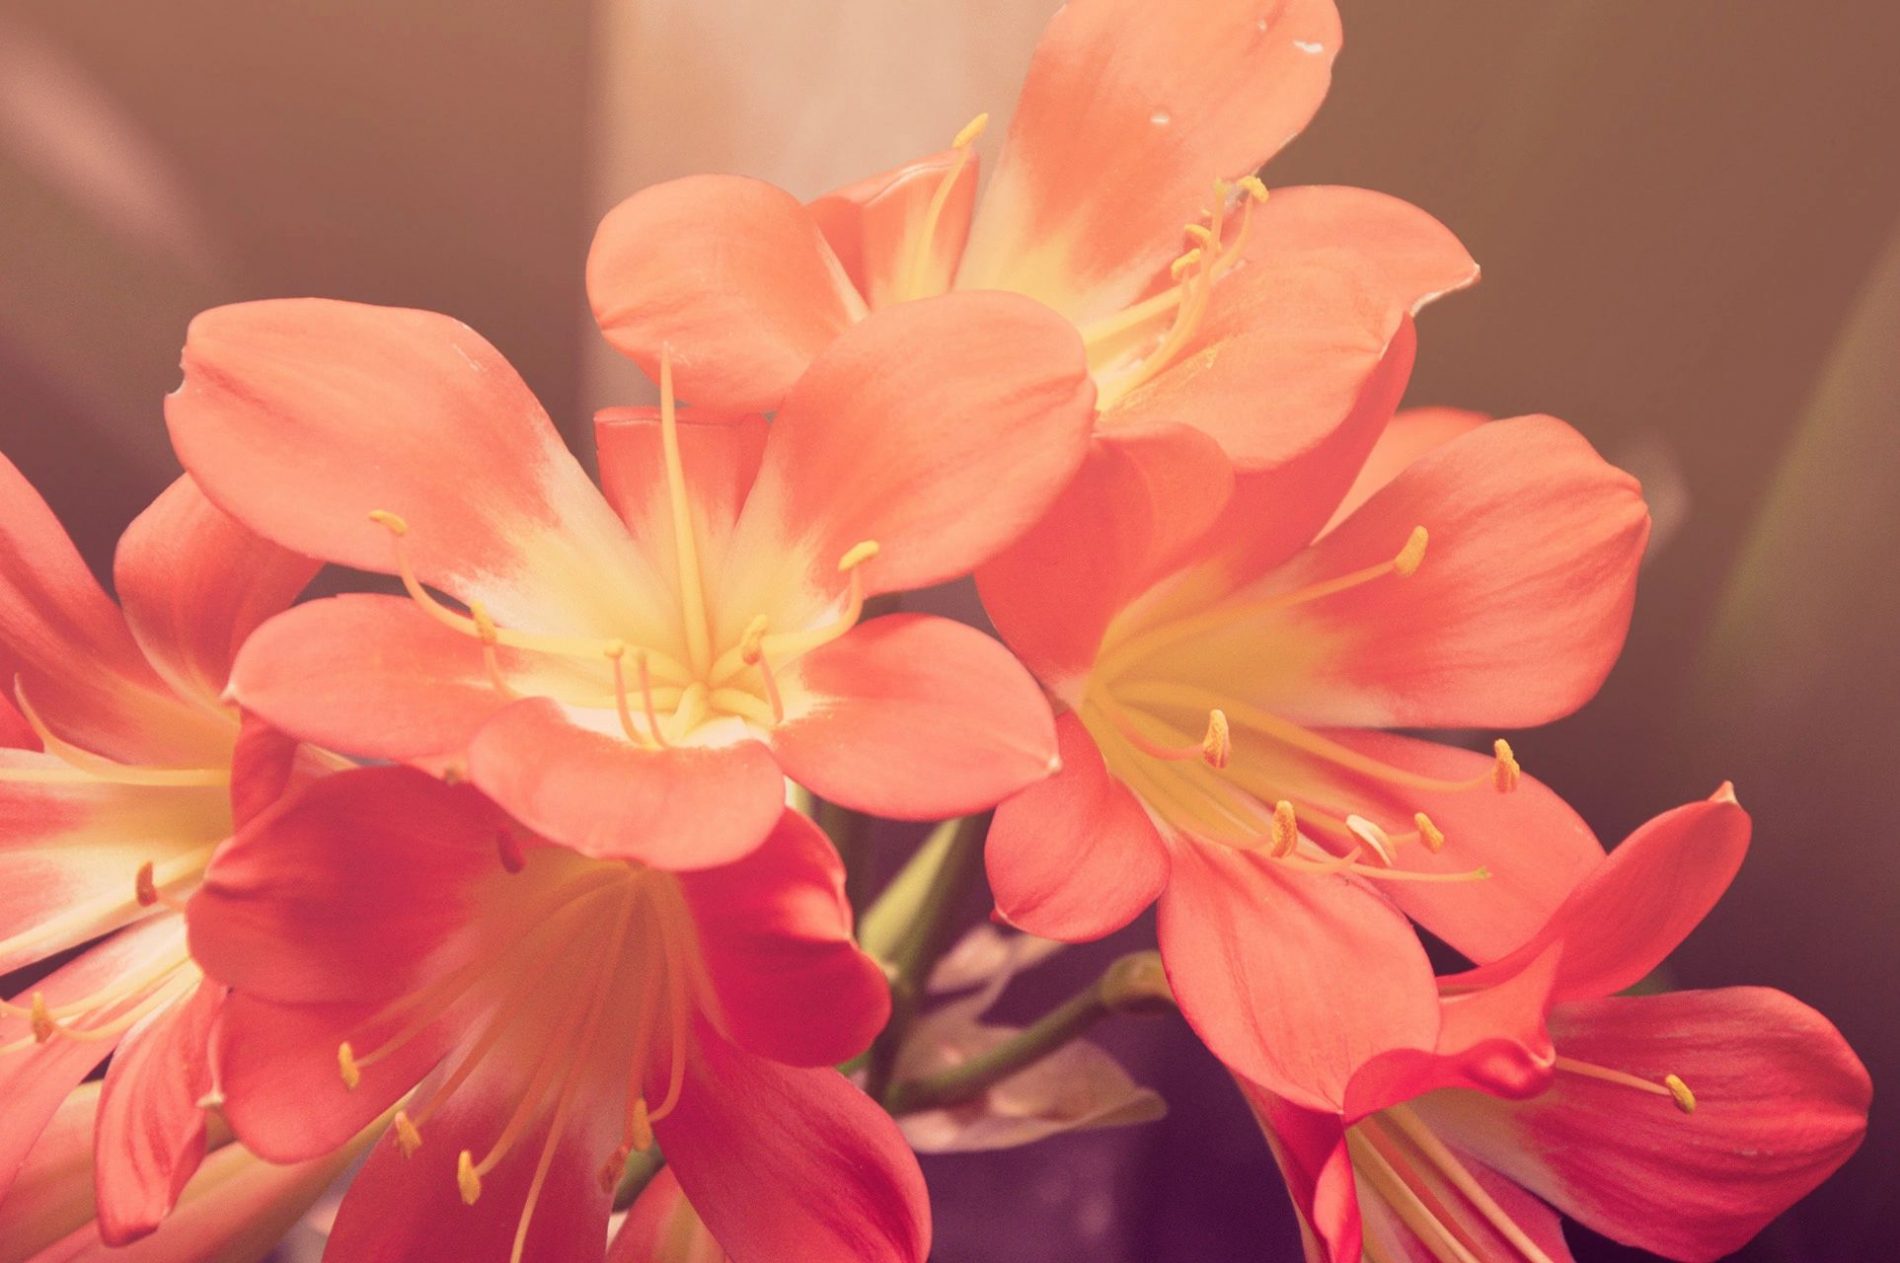 Orange flowers for blog by DC widow writer Marjorie Brimley